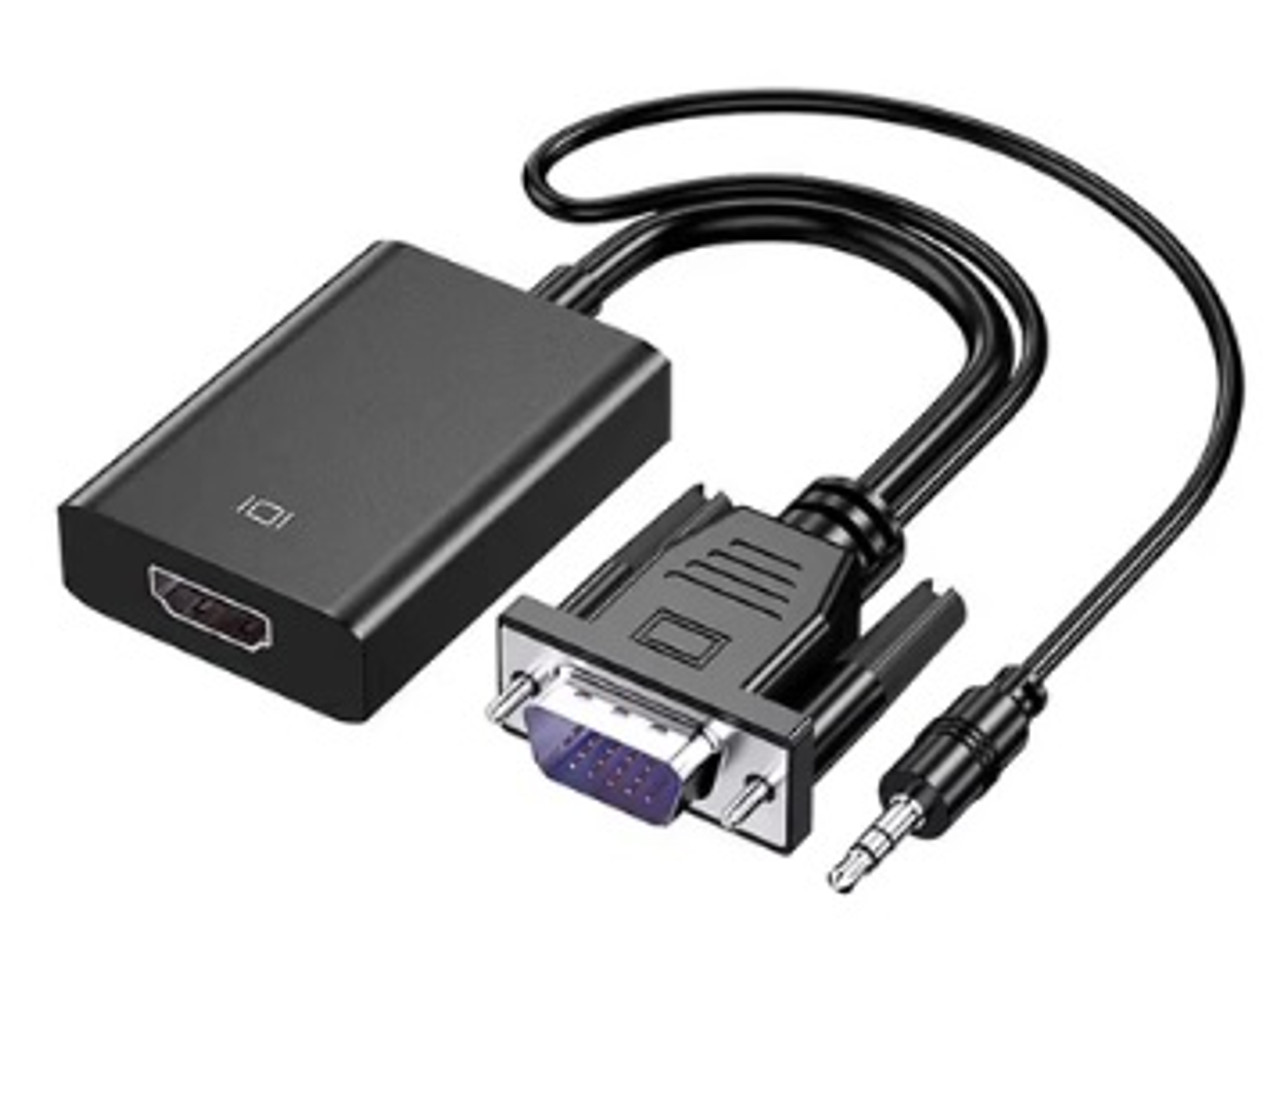 Adaptateur HDMI / VGA avec audio – LICB+